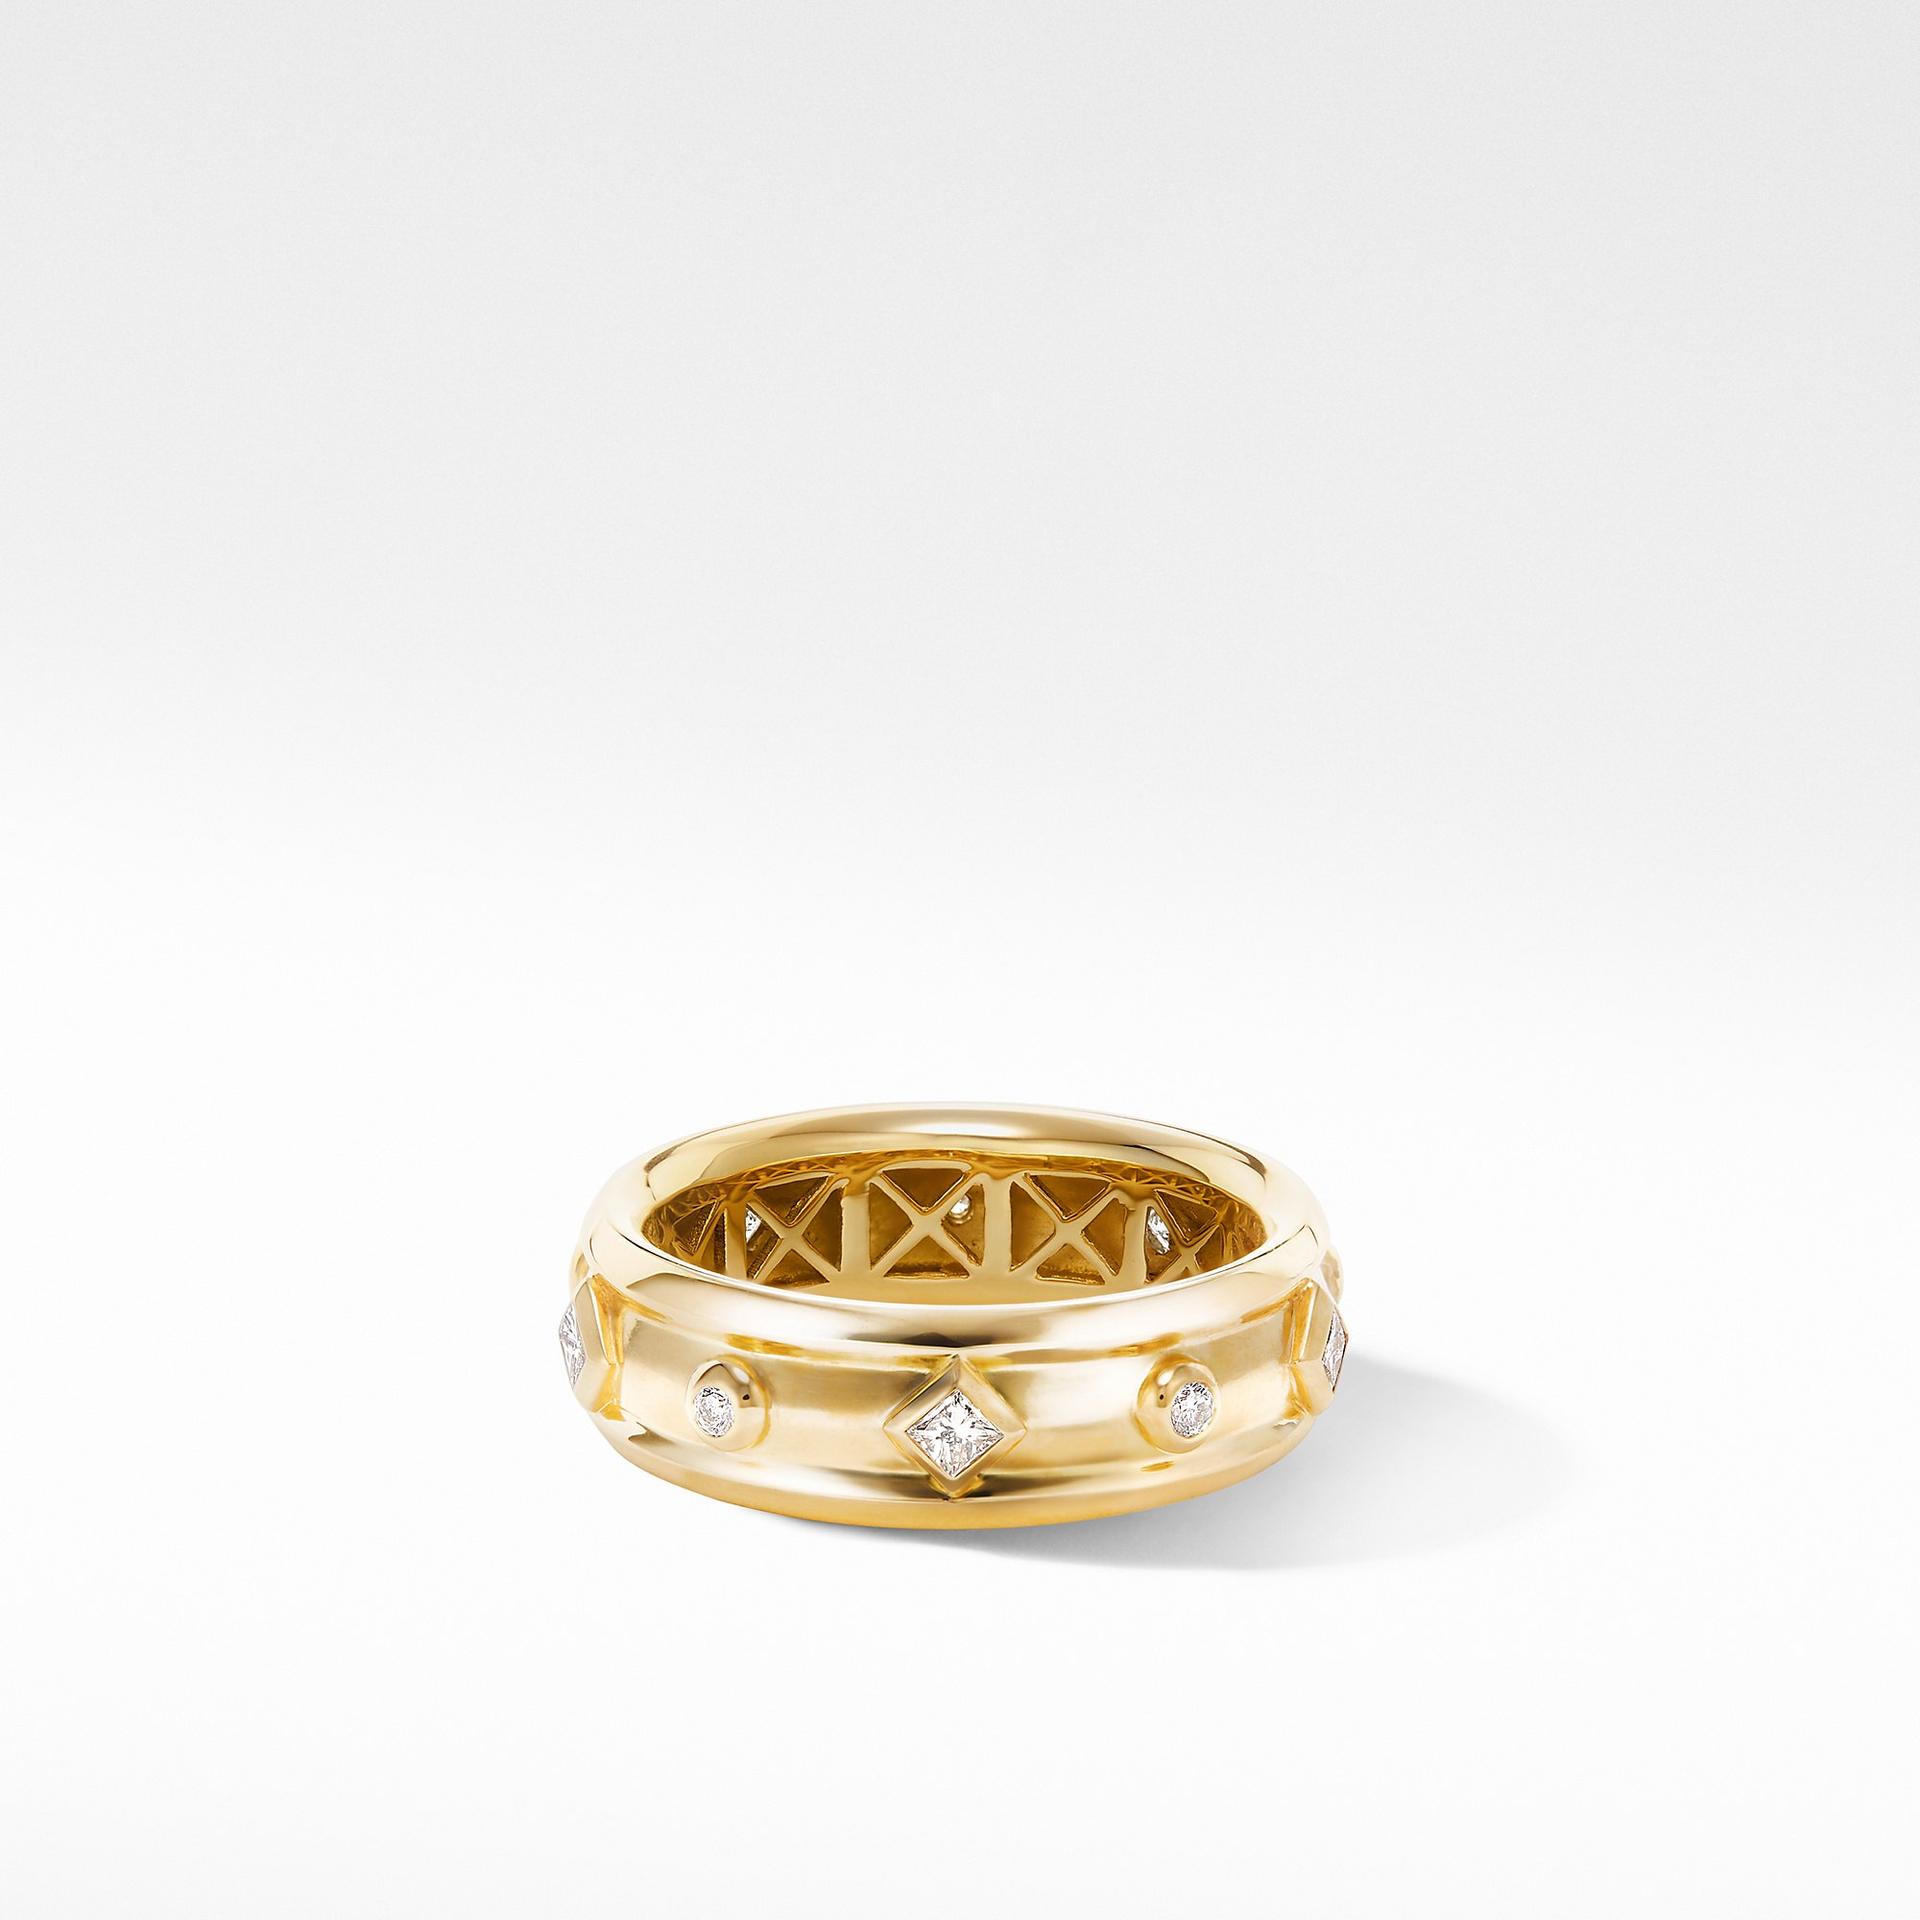 David Yurman Modern Renaissance Ring in 18K Yellow Gold with Diamonds and Knife Edge, size 7 0